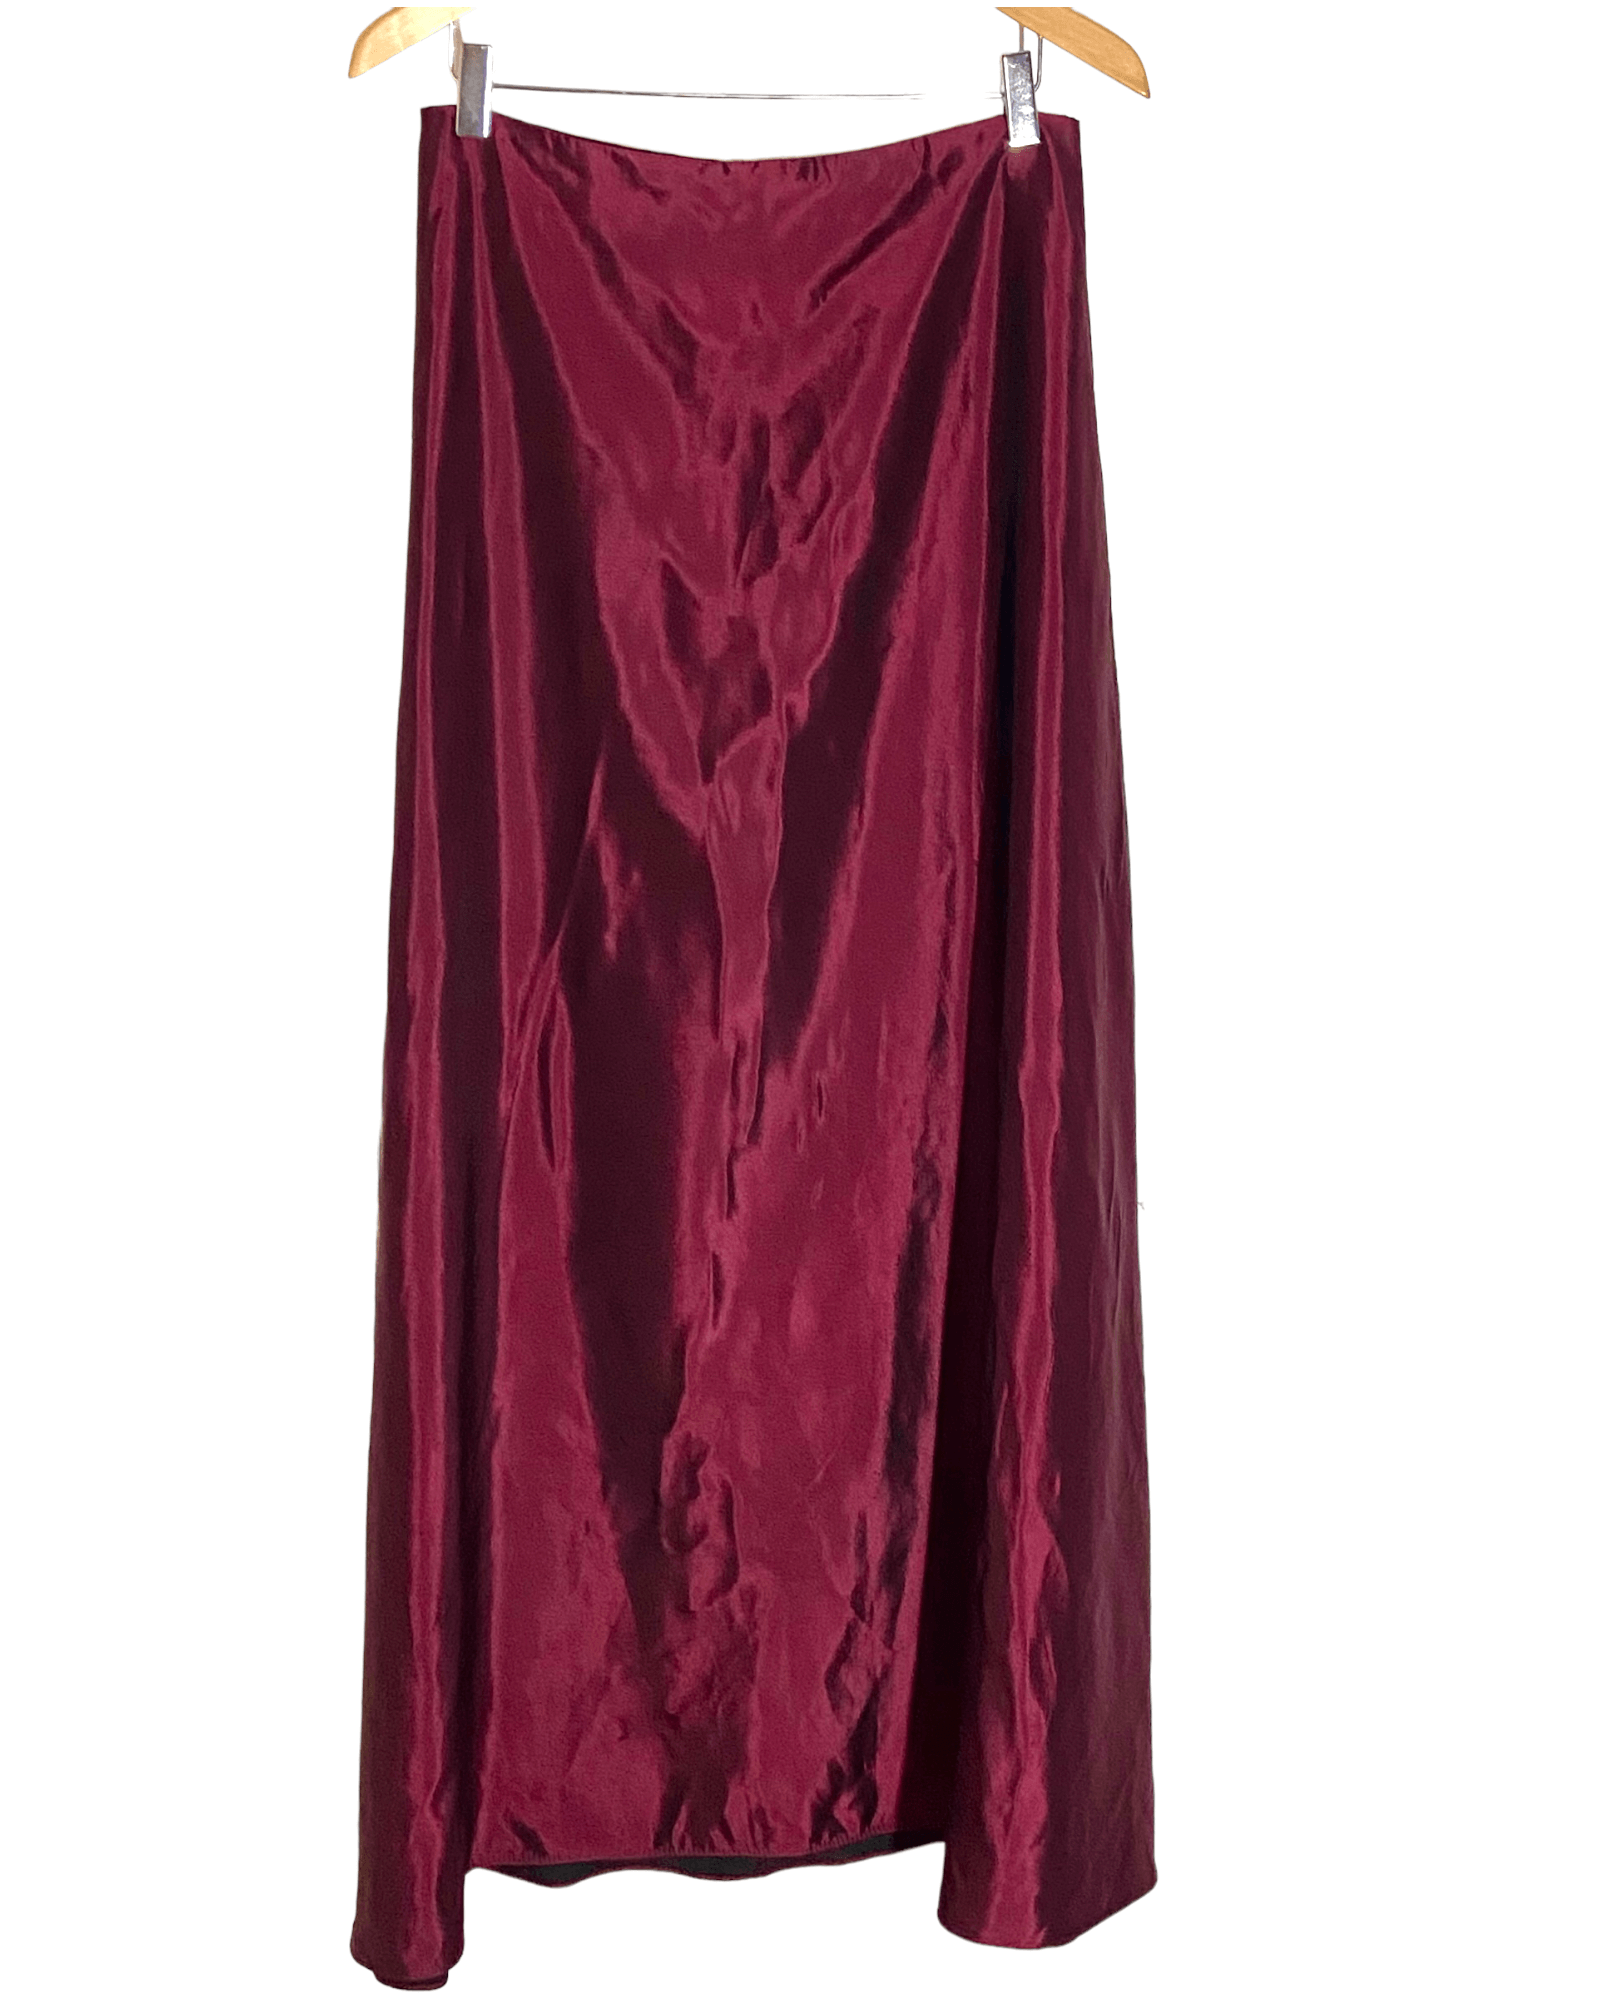 Dark Winter JS Collections burgundy shimmer skirt